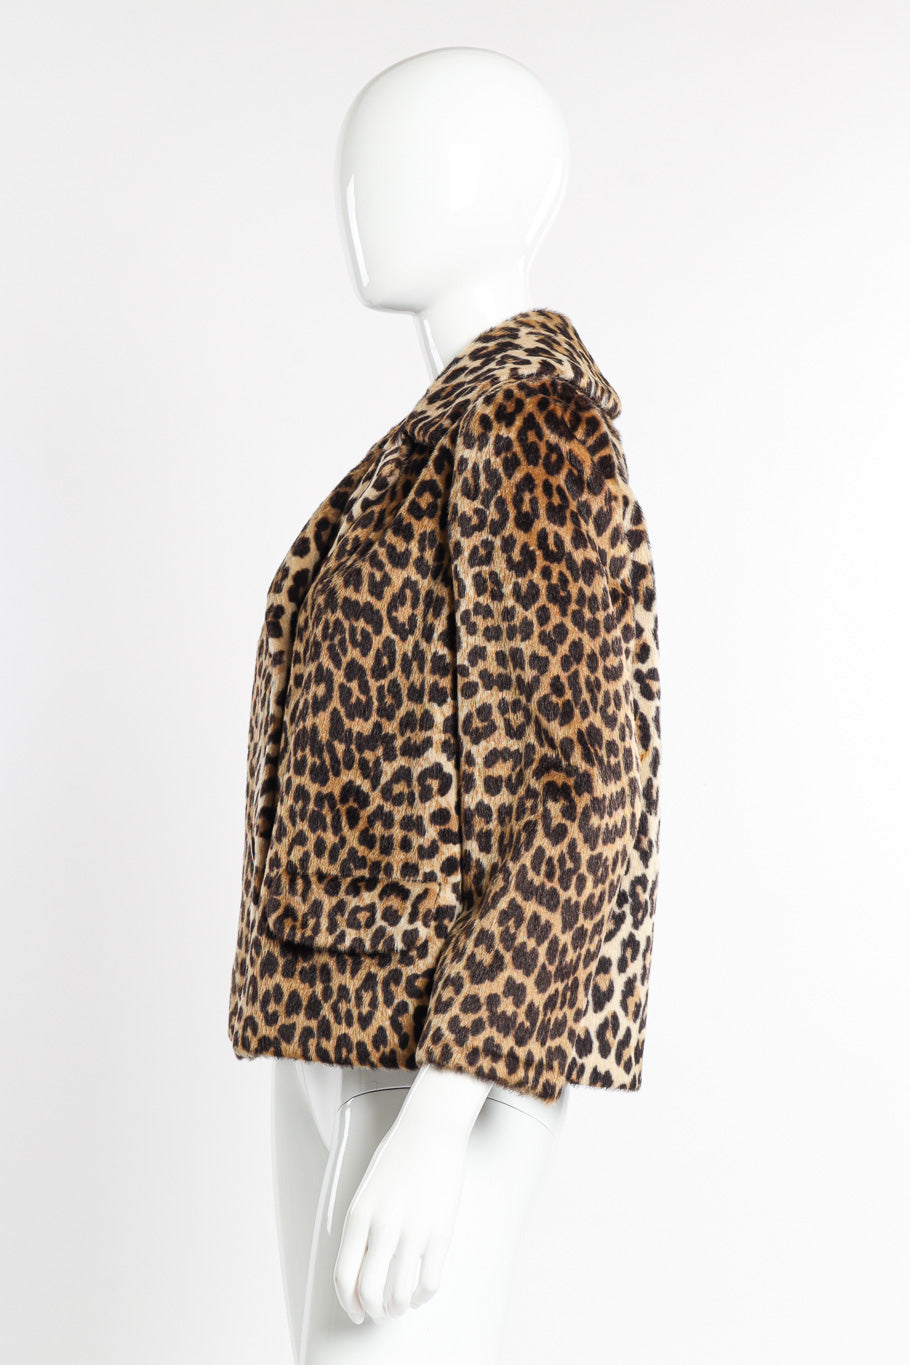 Vintage Marcus Leopard Print Jacket side view on mannequin @recessla